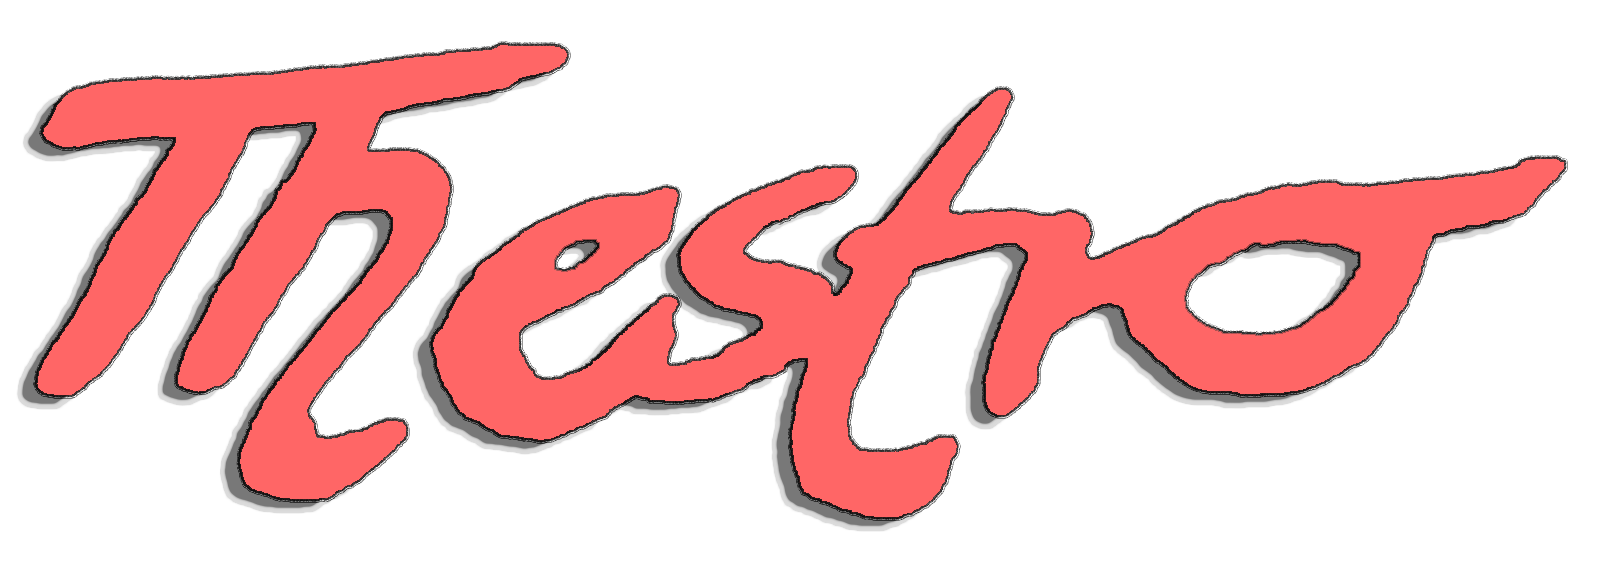 Thestro Logo